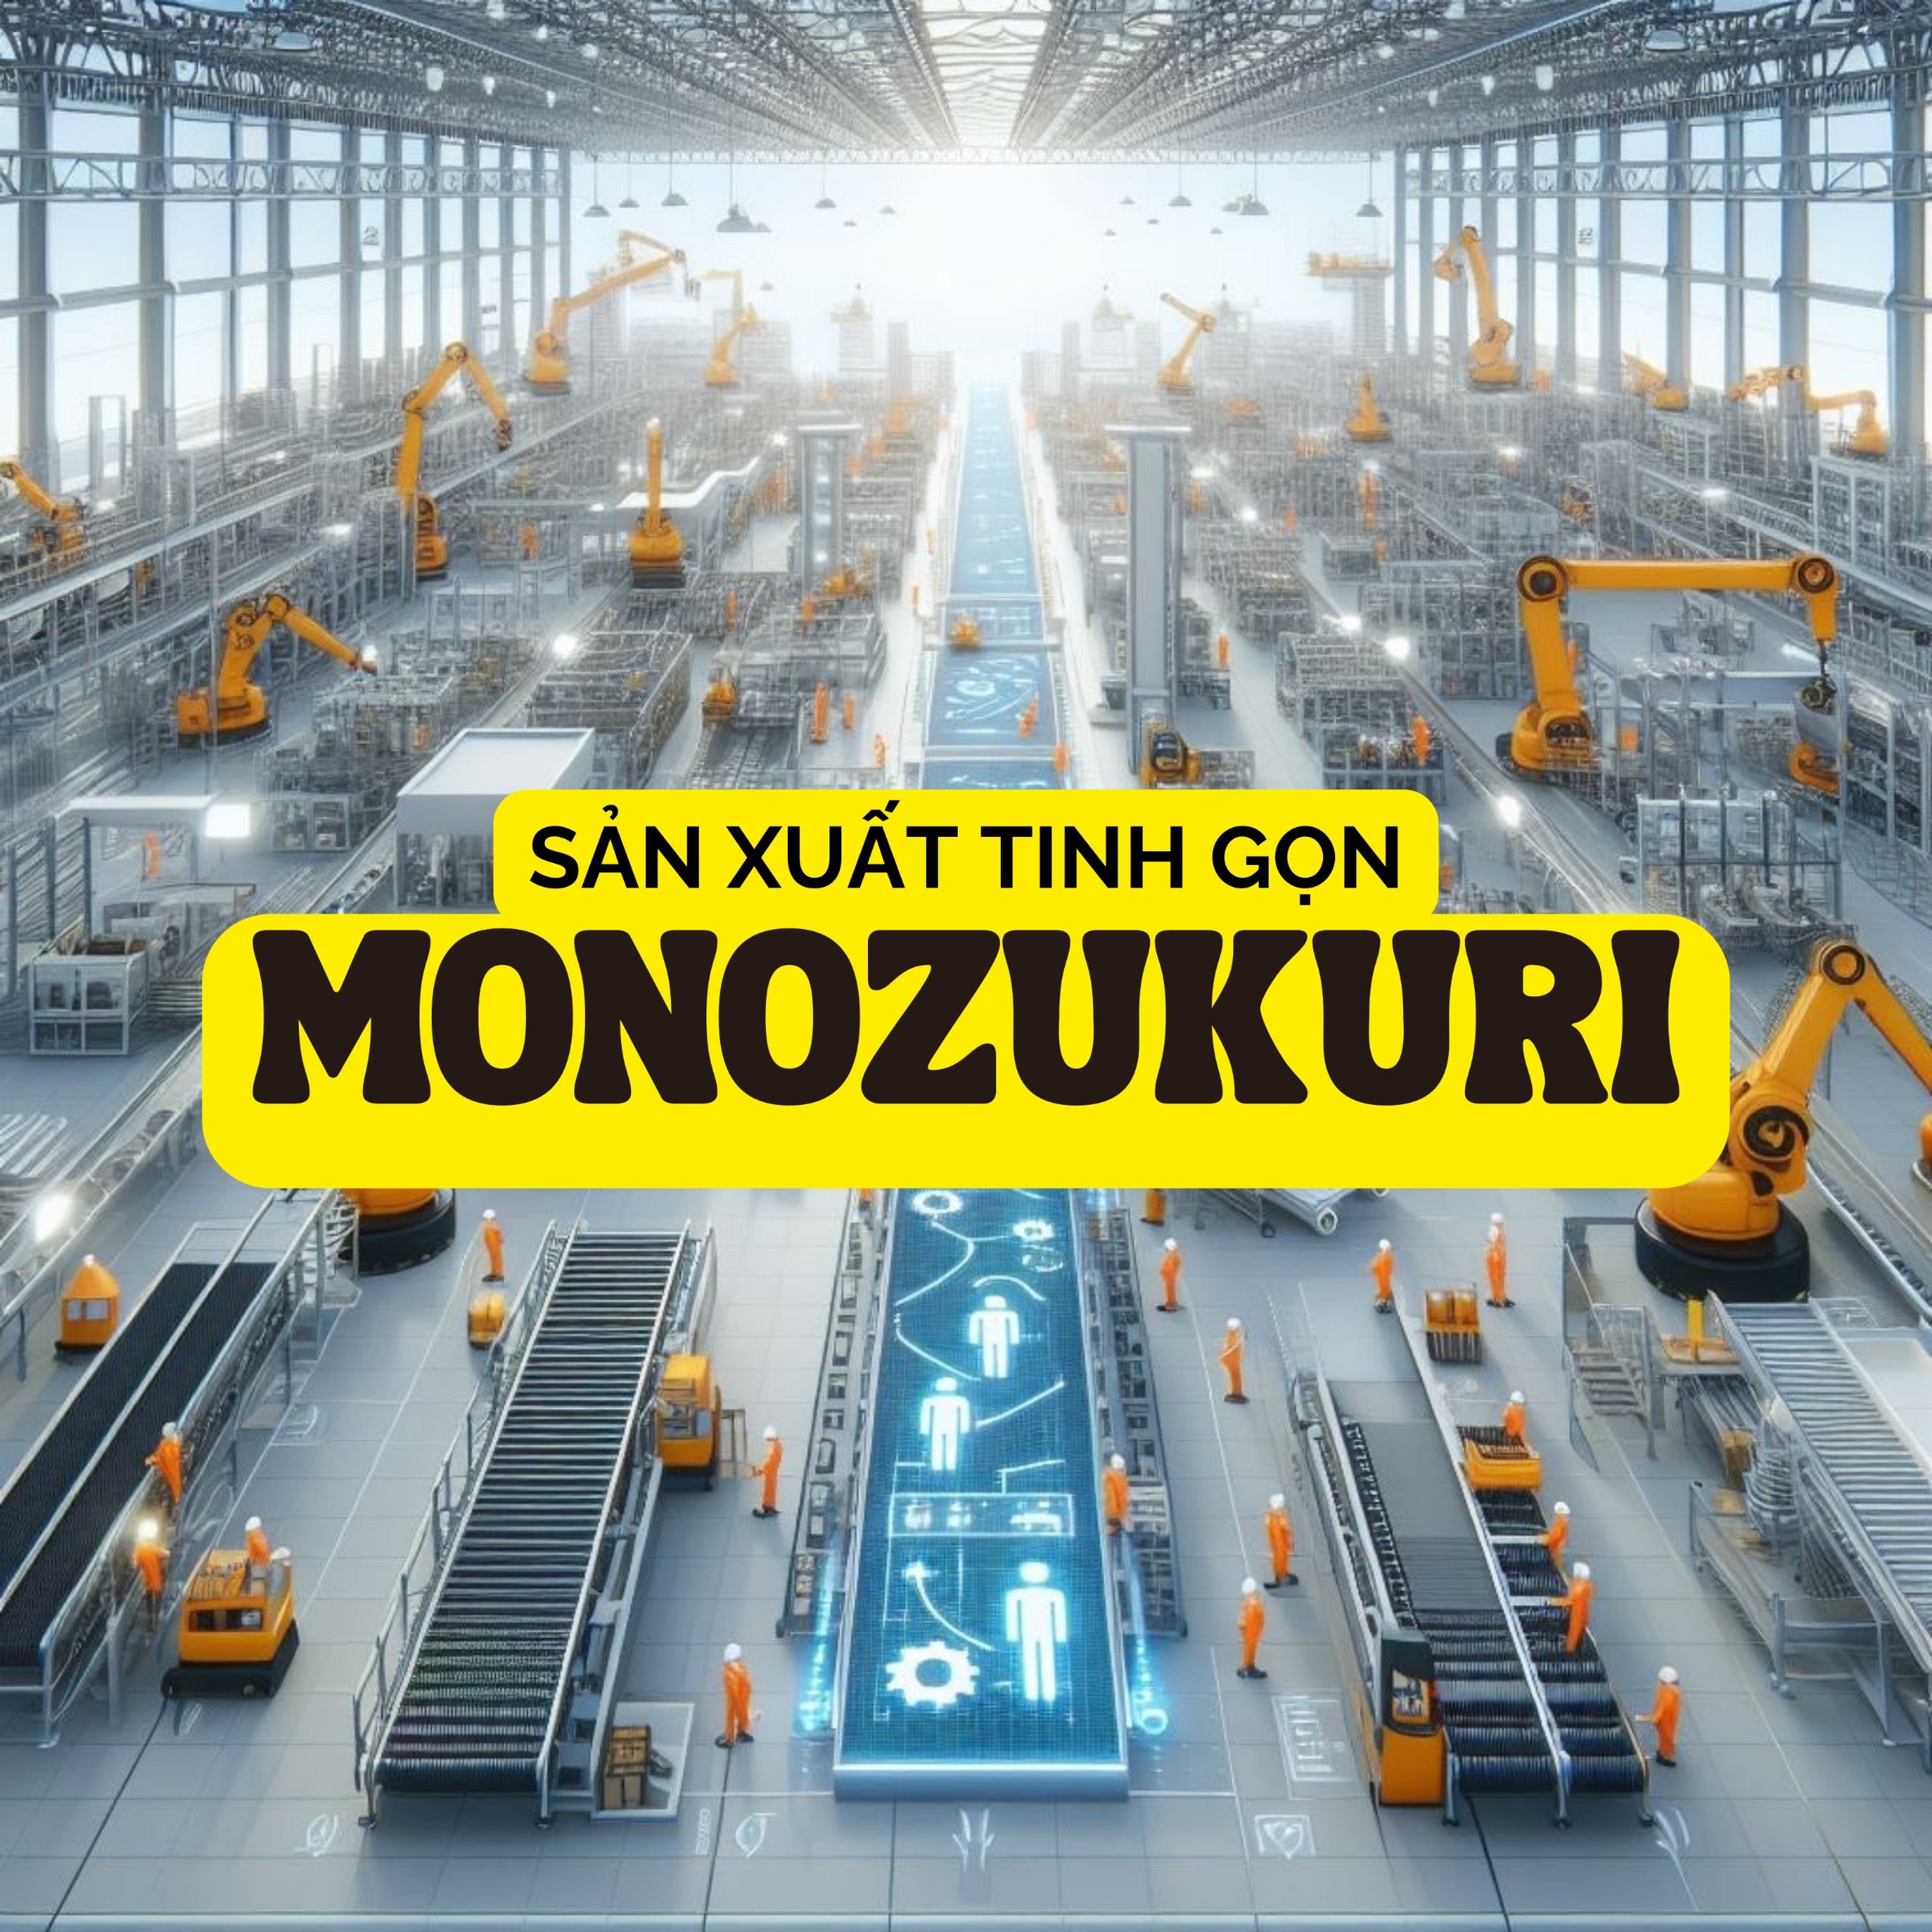 Introduction to Japan’s lean manufacturing system - Monozukuri